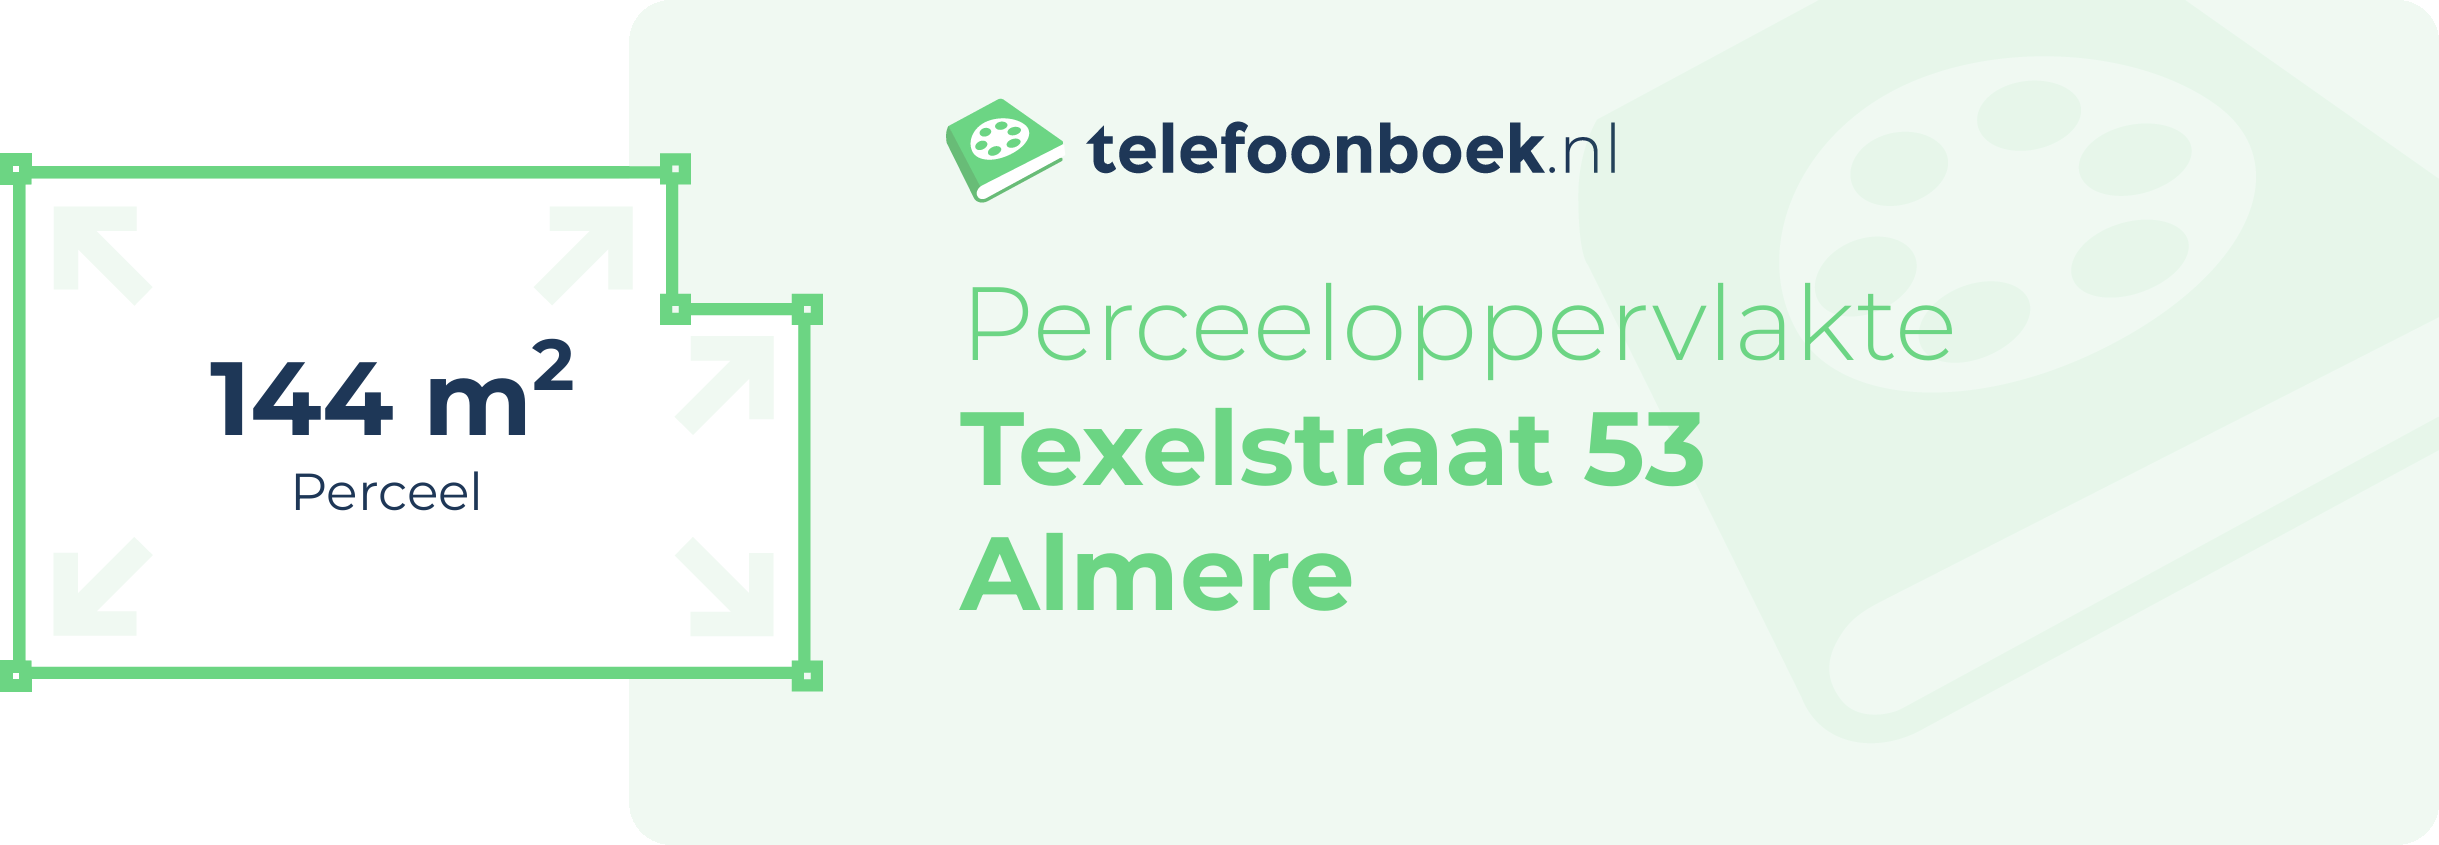 Perceeloppervlakte Texelstraat 53 Almere